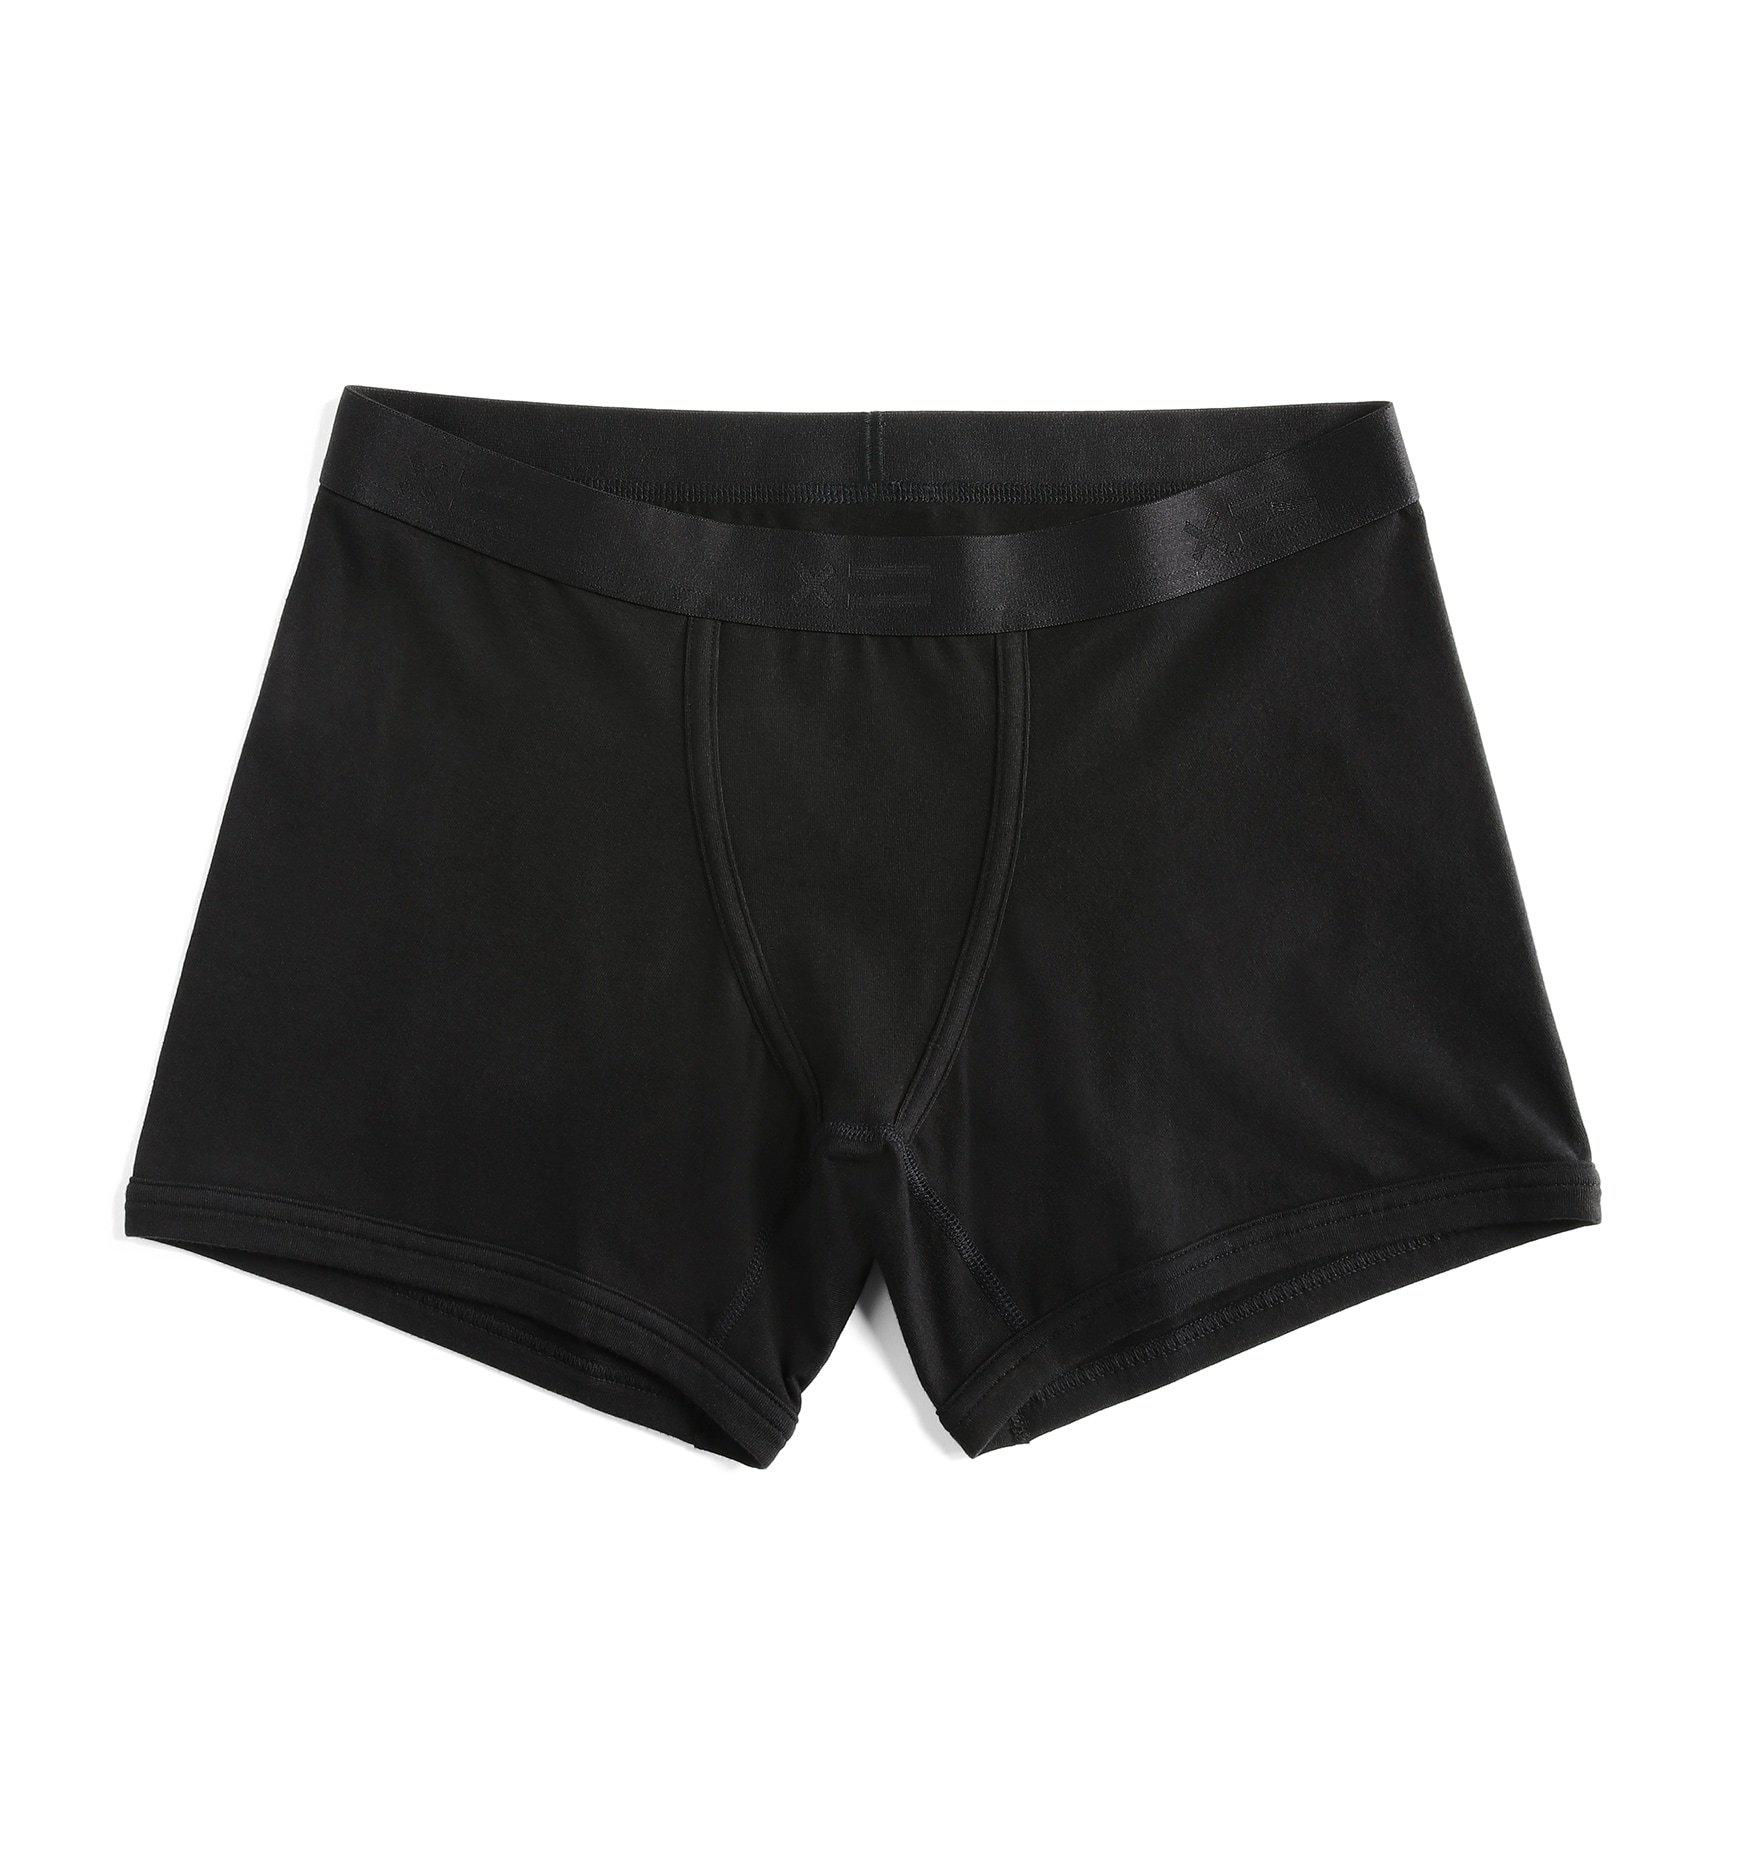 4.5 Inseam Trunk Underwear for Any Body, X= Black – TomboyX